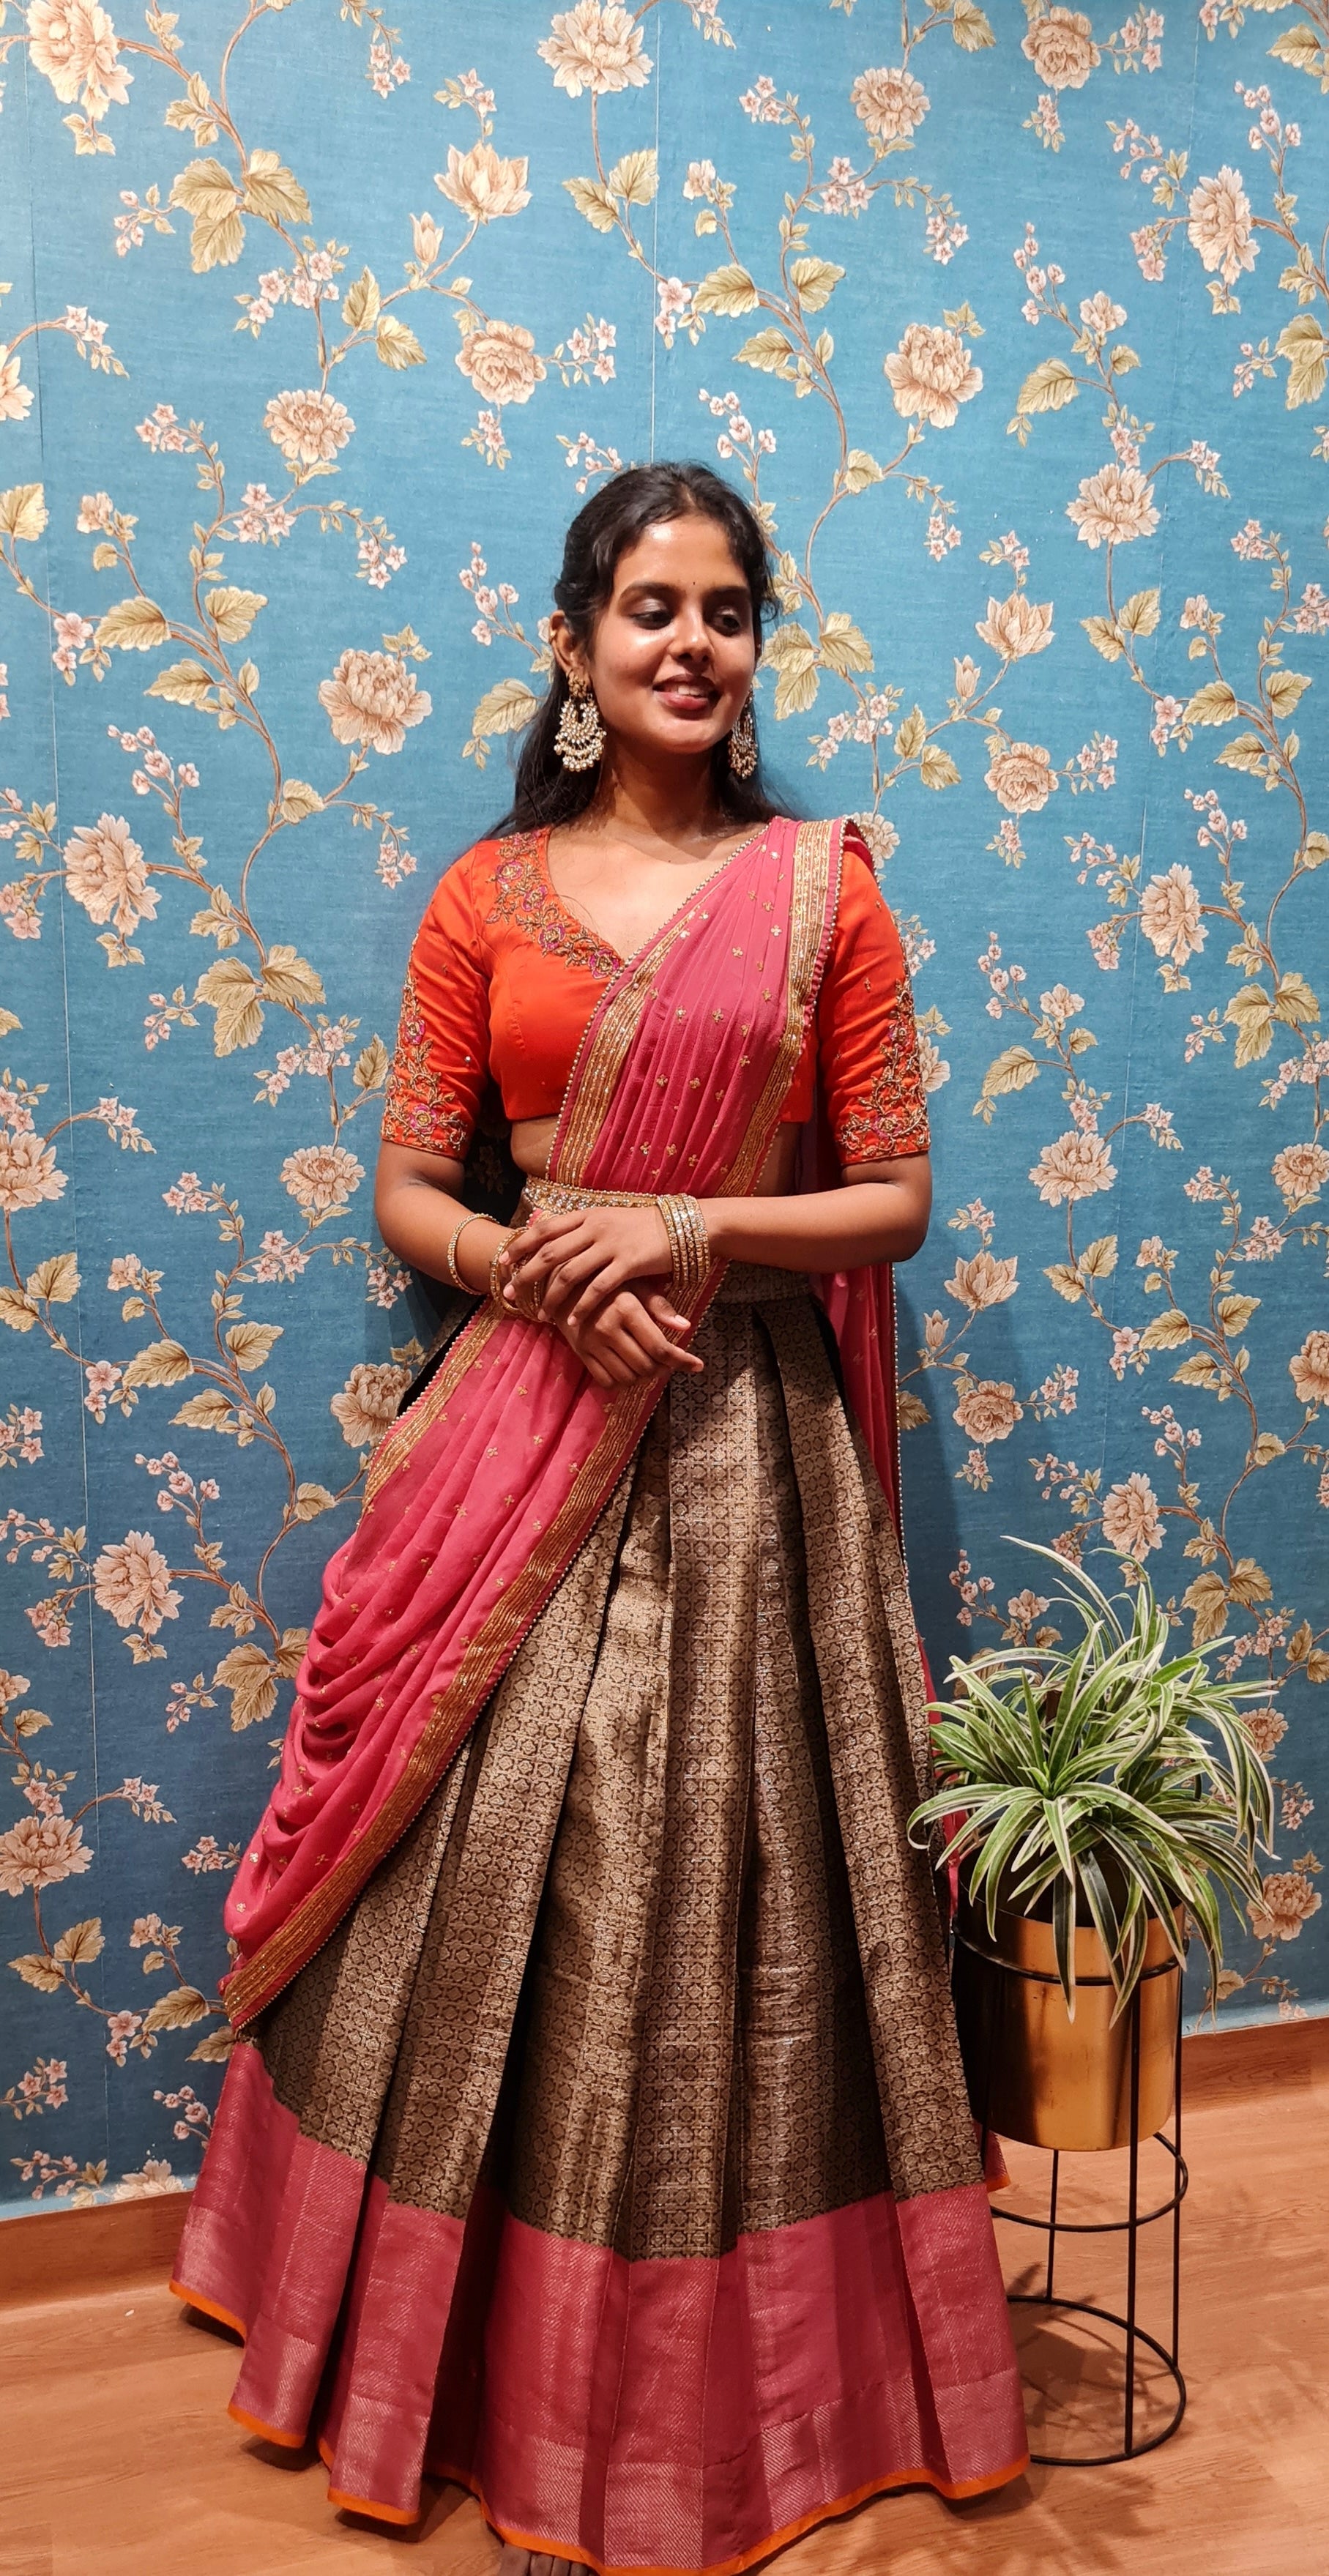 Stunning #Blouse #sleeve designs, short sleeves, puff sleeves, pleated  sleeves for Saree blouse - YouTube